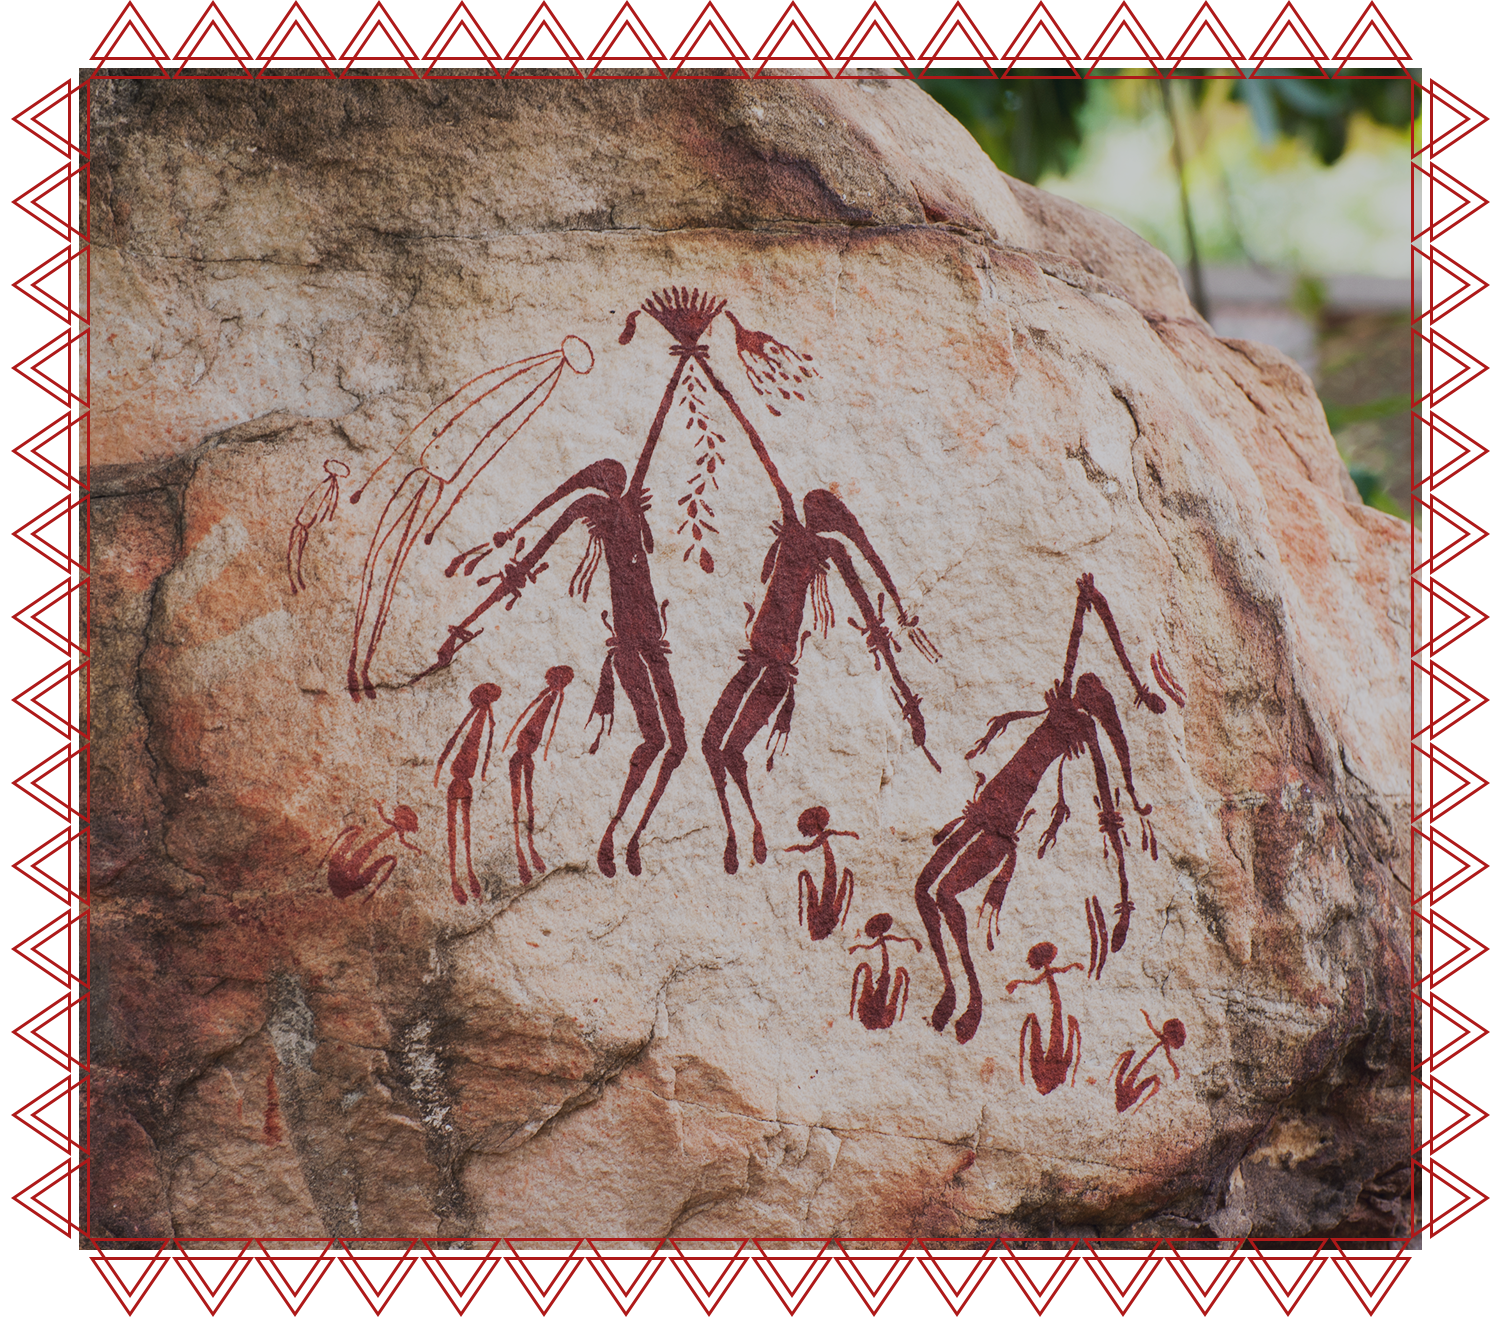 IACFS Schamanismus - Felsenmalerei der Aborigines in Australien